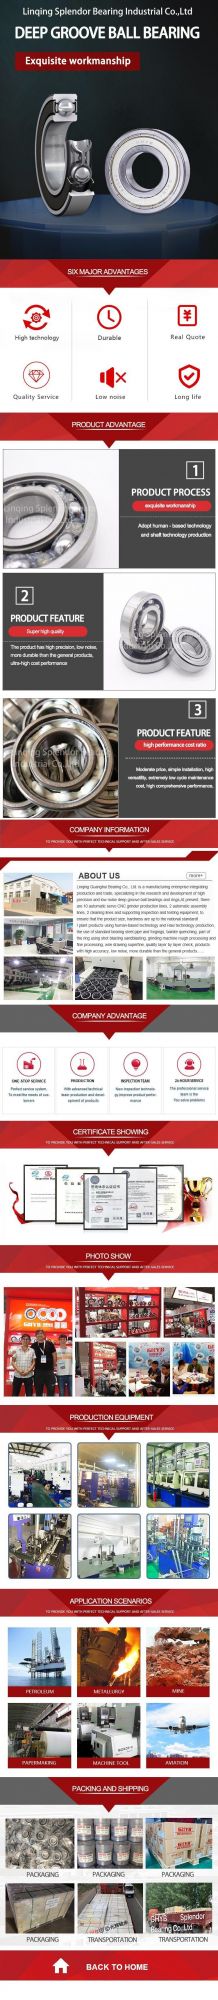 China Factory Distributor Supplier of Deep Groove Ball Bearings for Motors, Compressors, Alternators 6305-2rz/P6/Z2V2